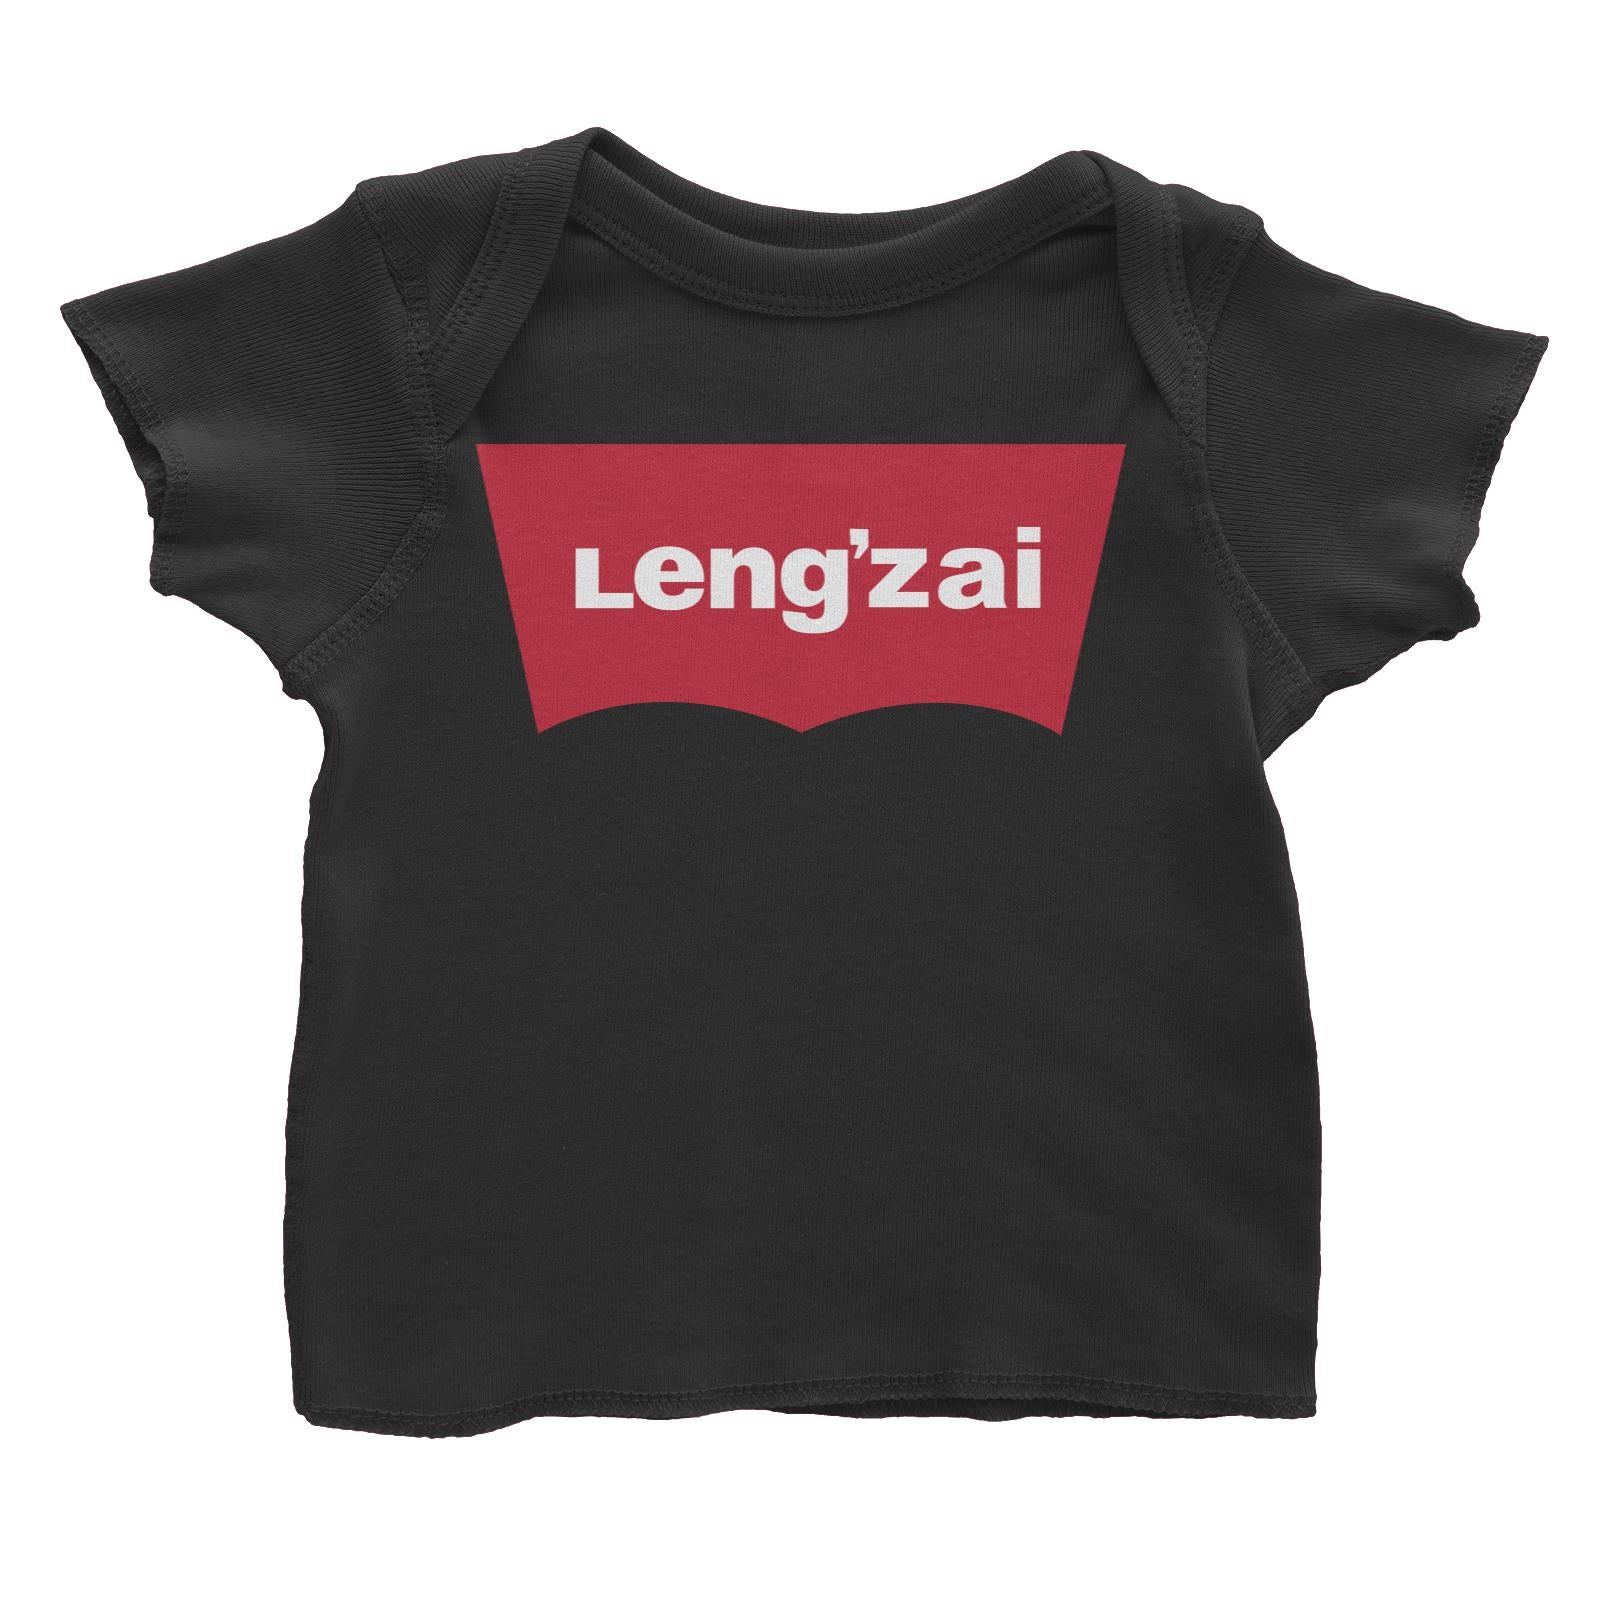 Slang Statement Lengzai Baby T-Shirt